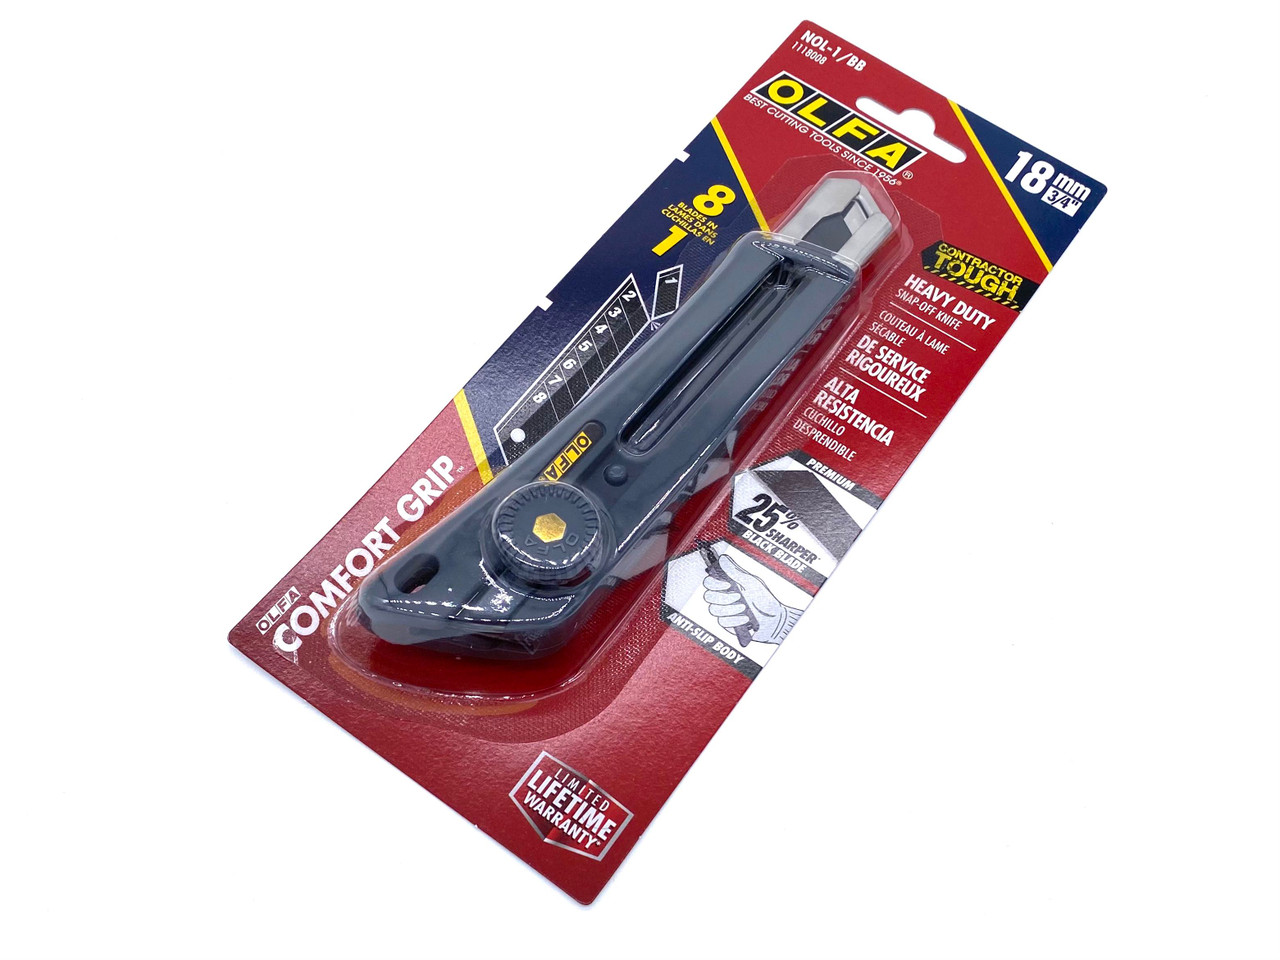 OLFA? 18mm Fiberglass Rubber Grip Ratchet-Lock Utility Knife